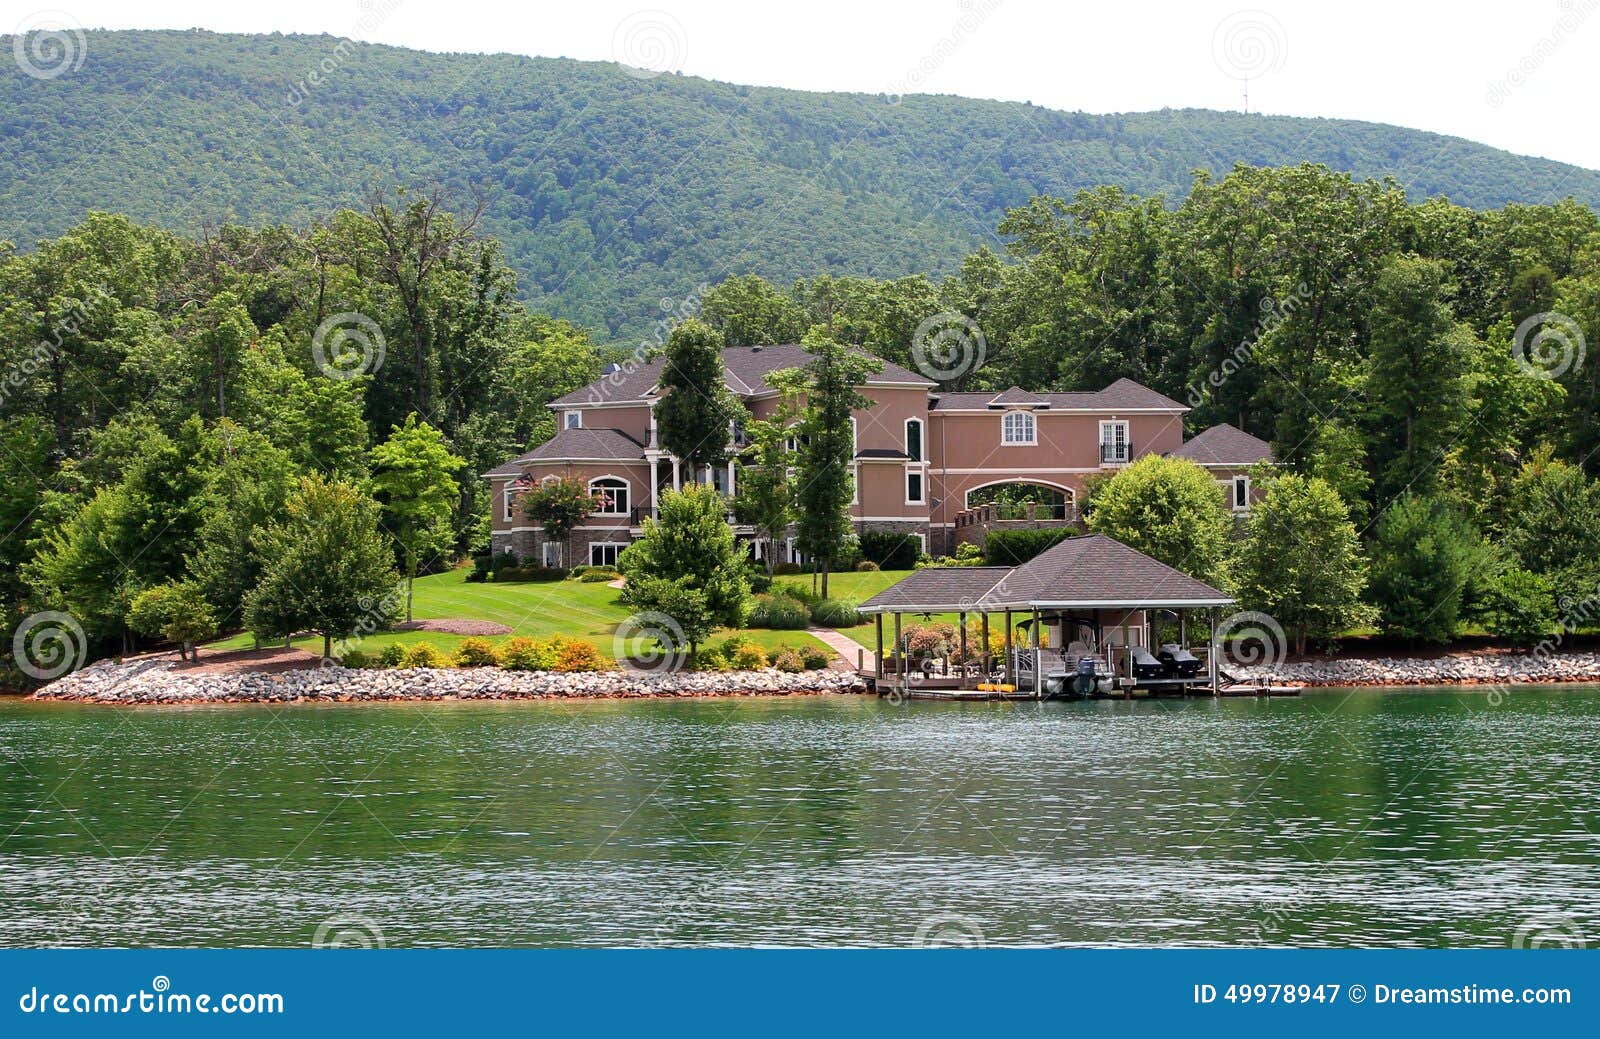 mountain lakeside vacation home